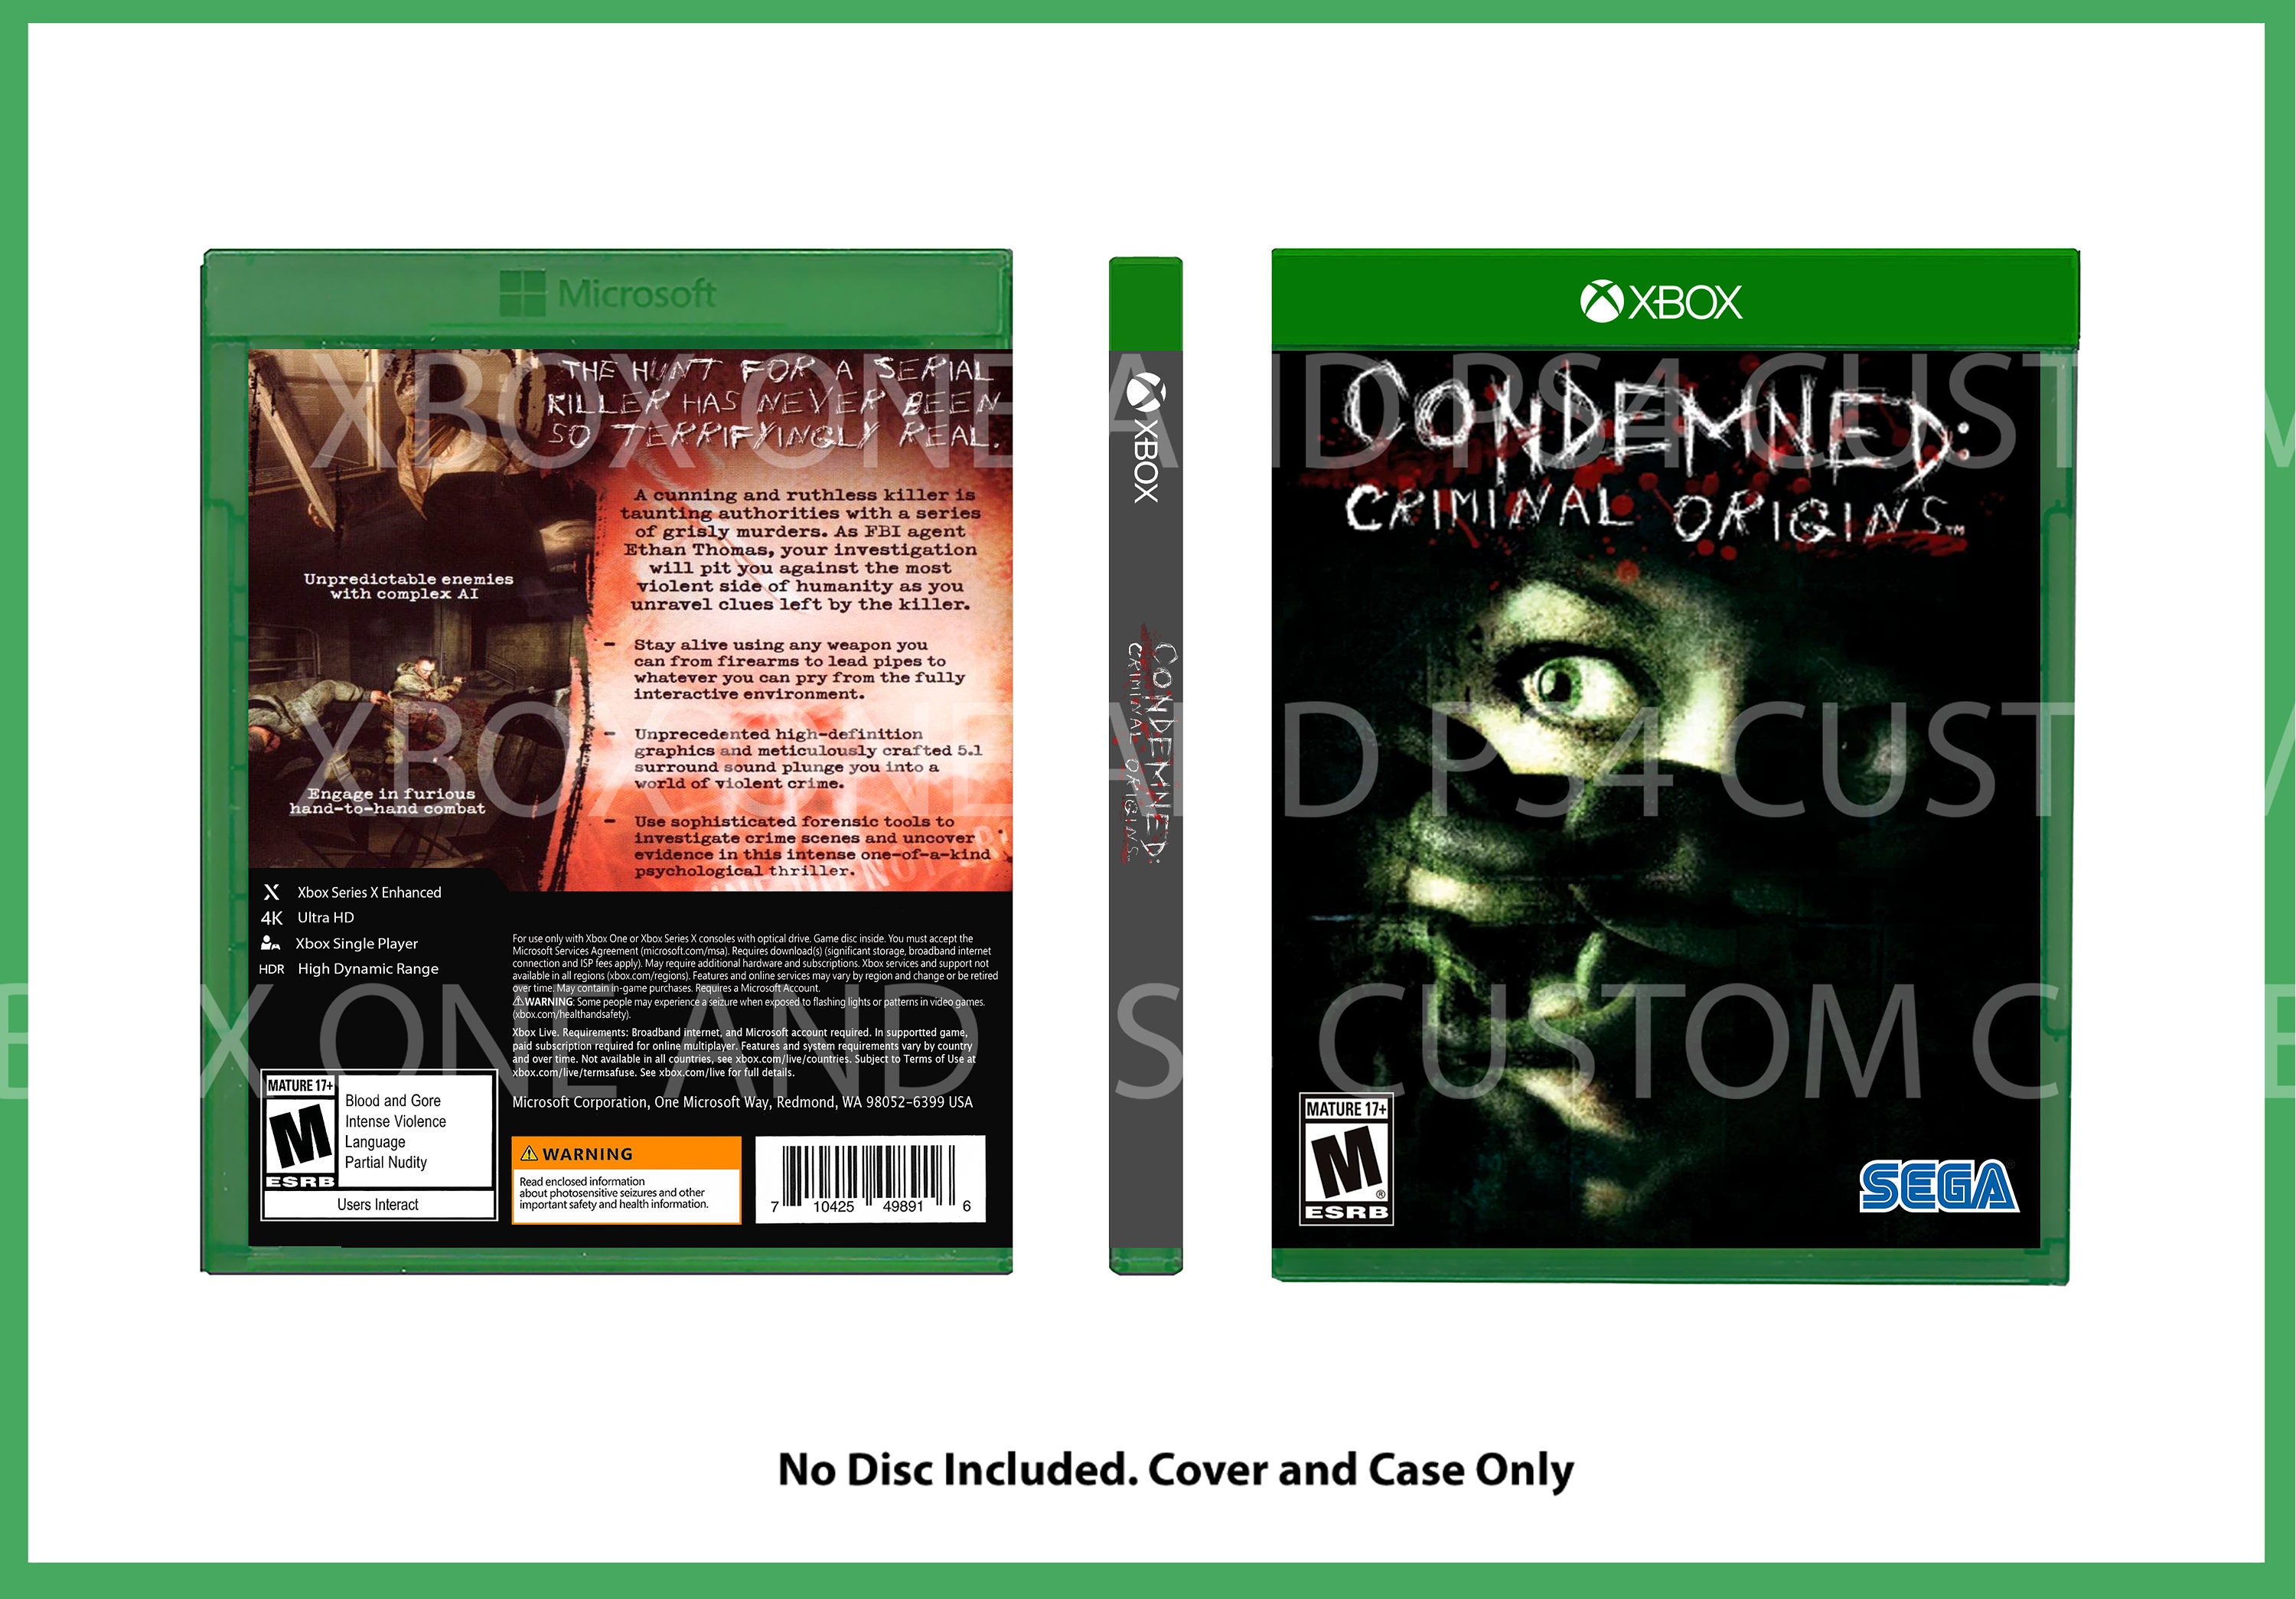 CUSTOM REPLACEMENT CASE NO DISC Saints Row 2 XBOX SEE DESCRIPTION  752919550304 